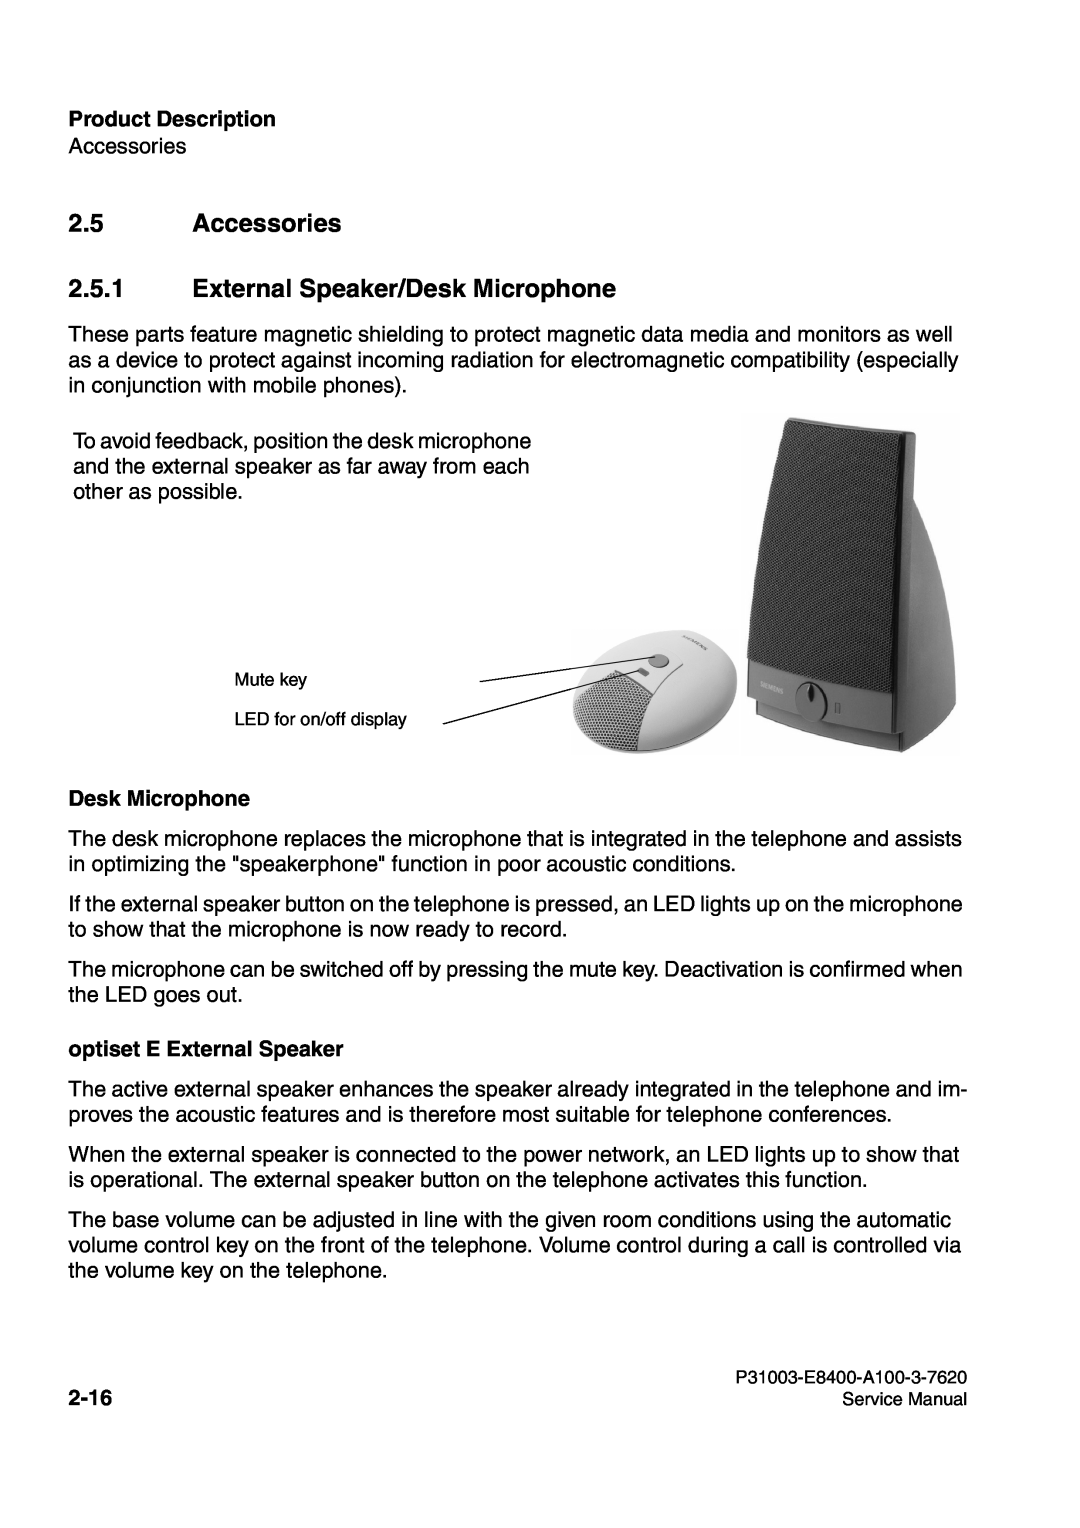 Siemens 500 Accessories 2.5.1 External Speaker/Desk Microphone, Product Description, optiset E External Speaker, 2-16 